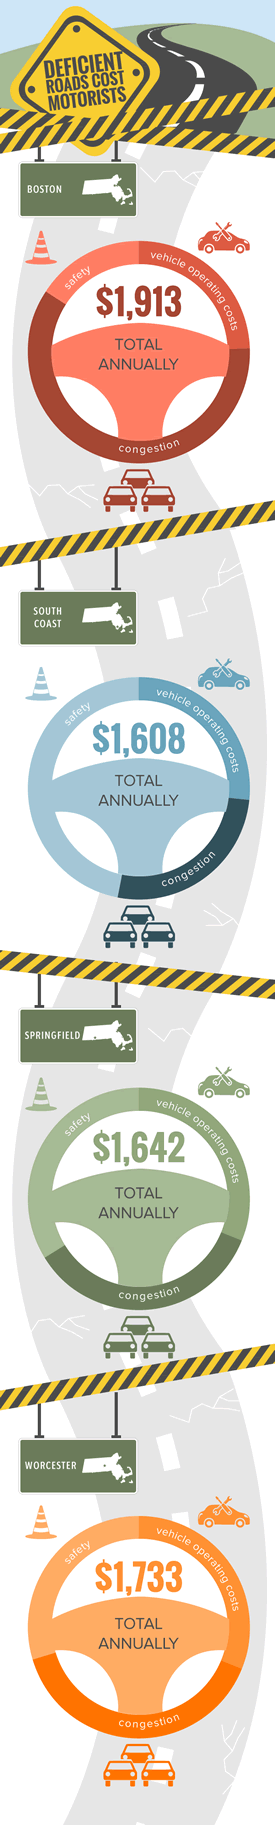 Massachusetts Deficient Roads Cost Motorists Infographic